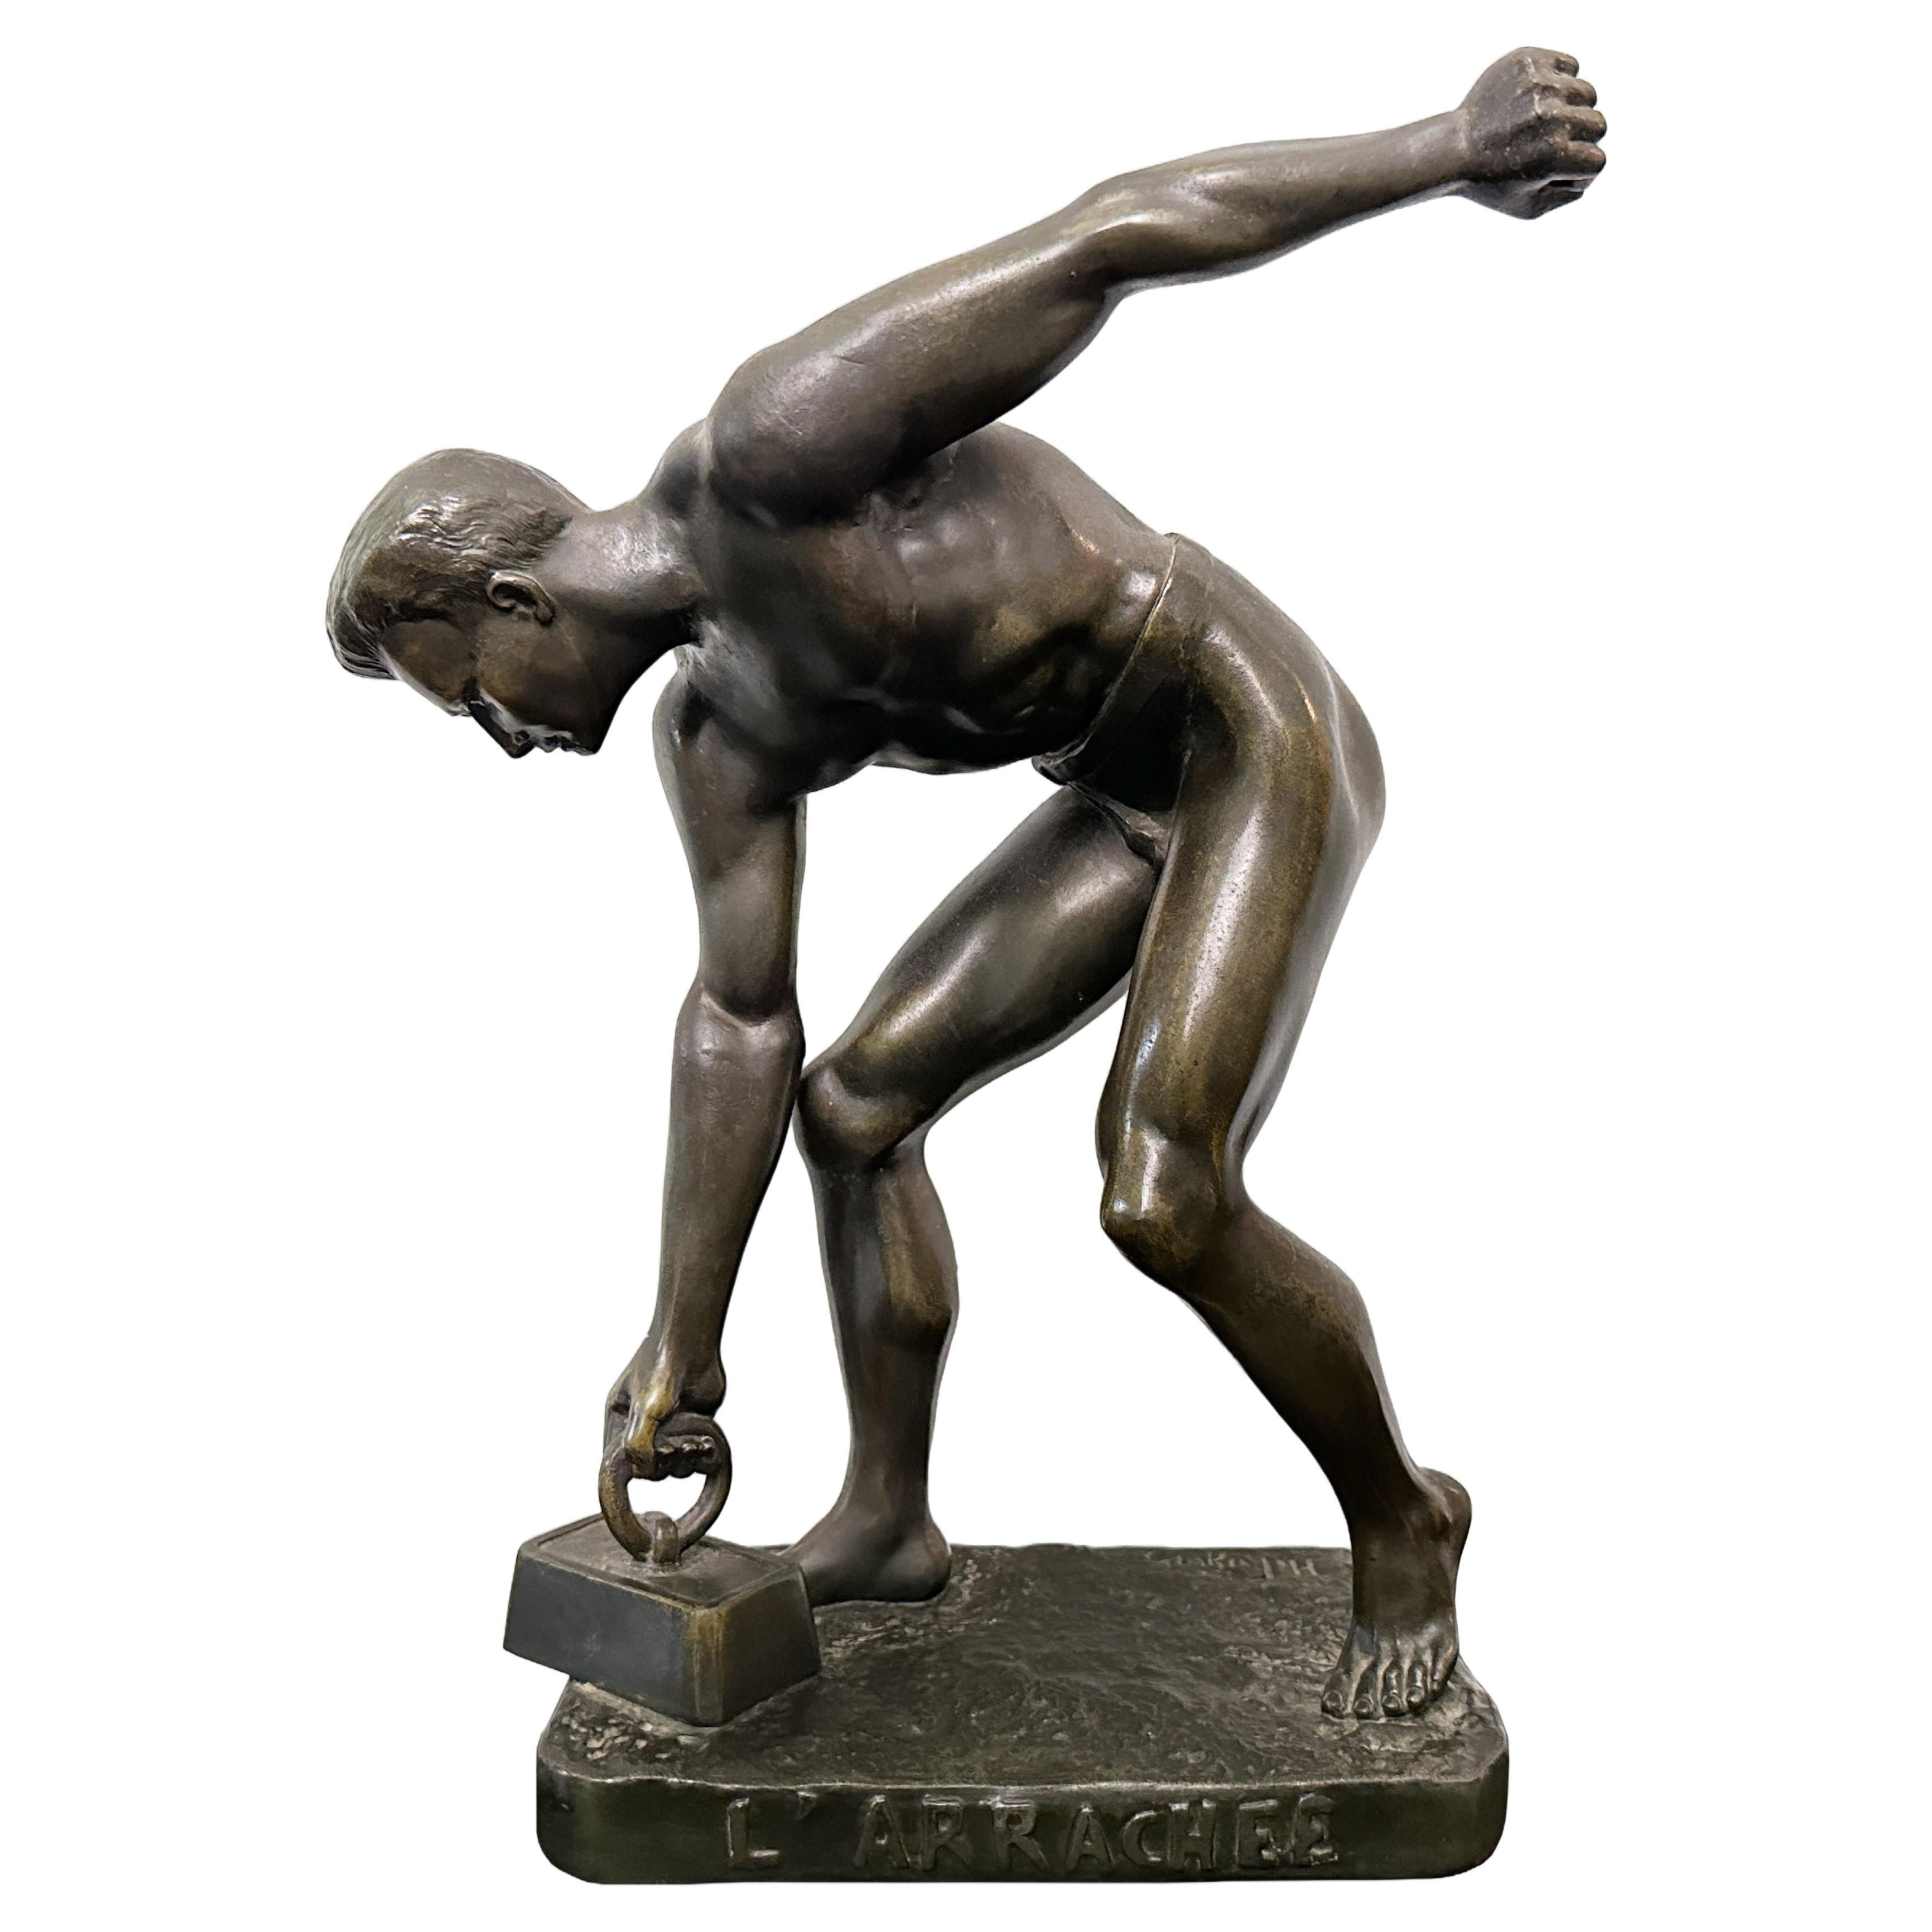 Henri Fugère " L'arrachee" Bronze Sculpture